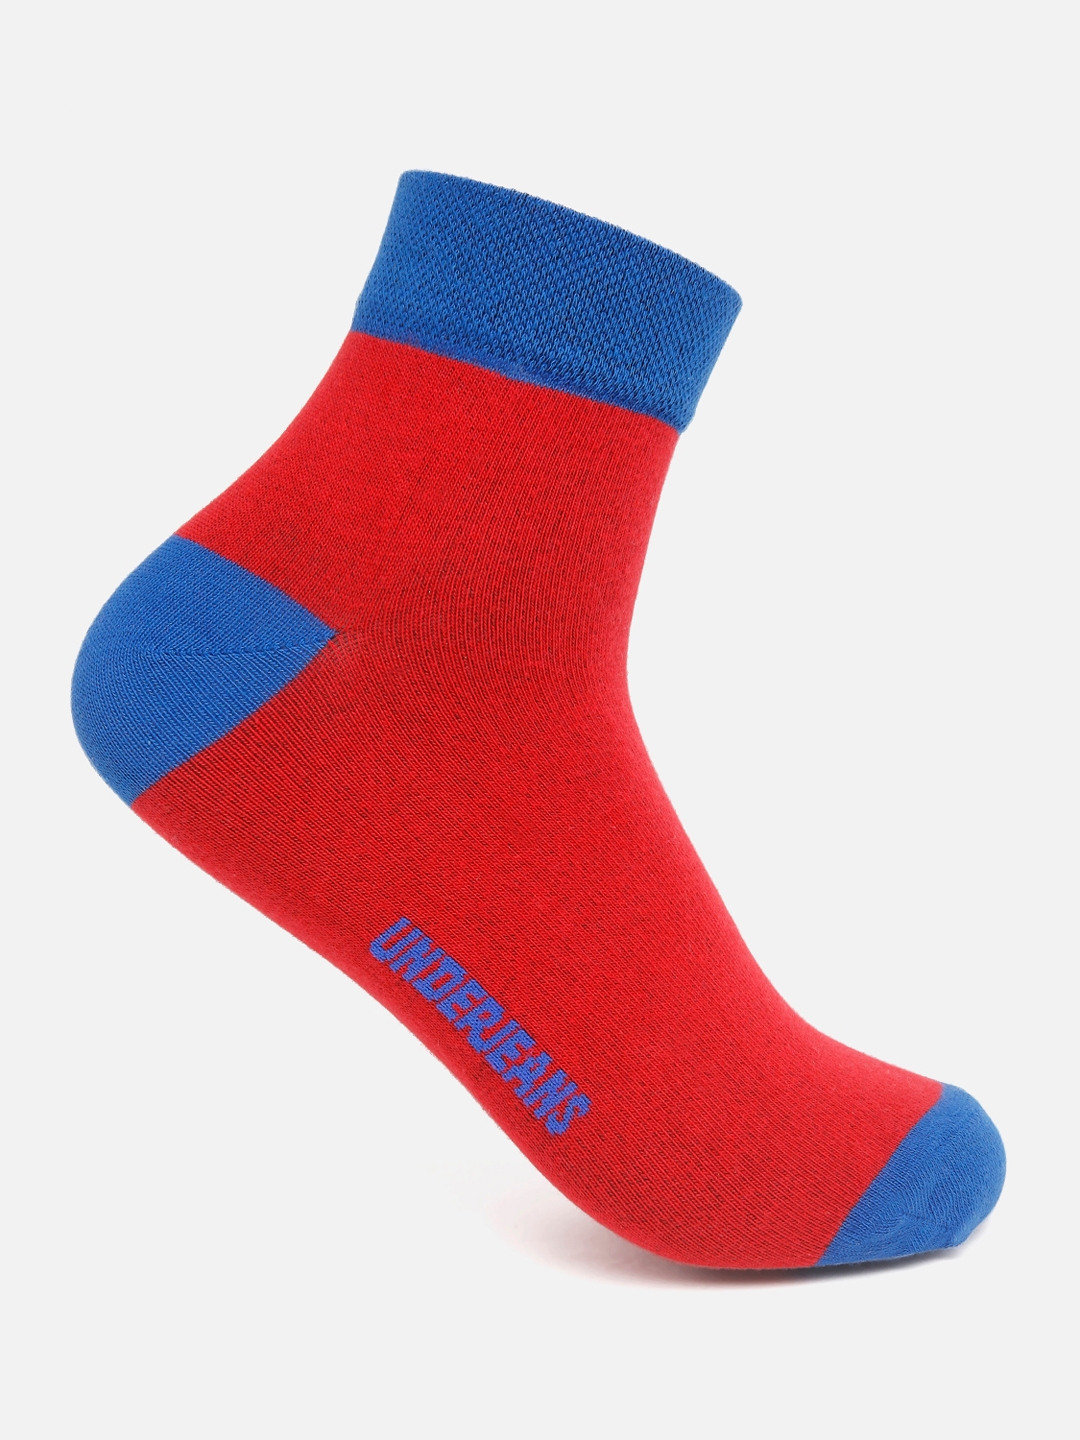 Spykar | Underjeans by Spykar Men Red/Blue Ankle Length (Non Terry) Single Pair of Socks